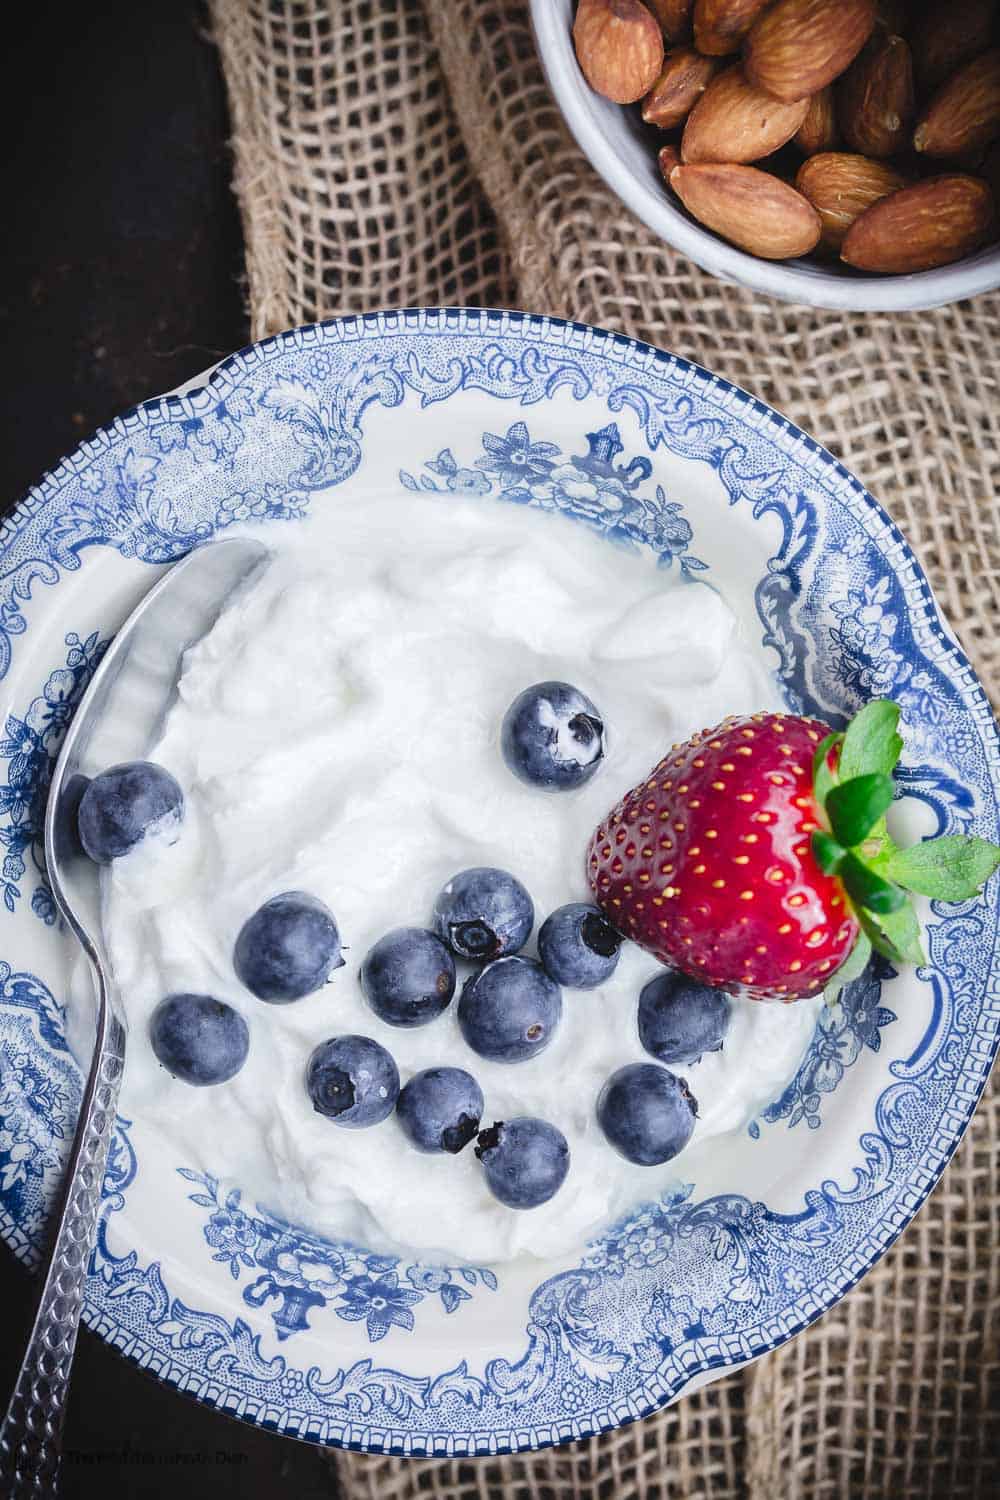 Greek yogurt with fresh blue berries and strawberry for a Mediterranean diet snack